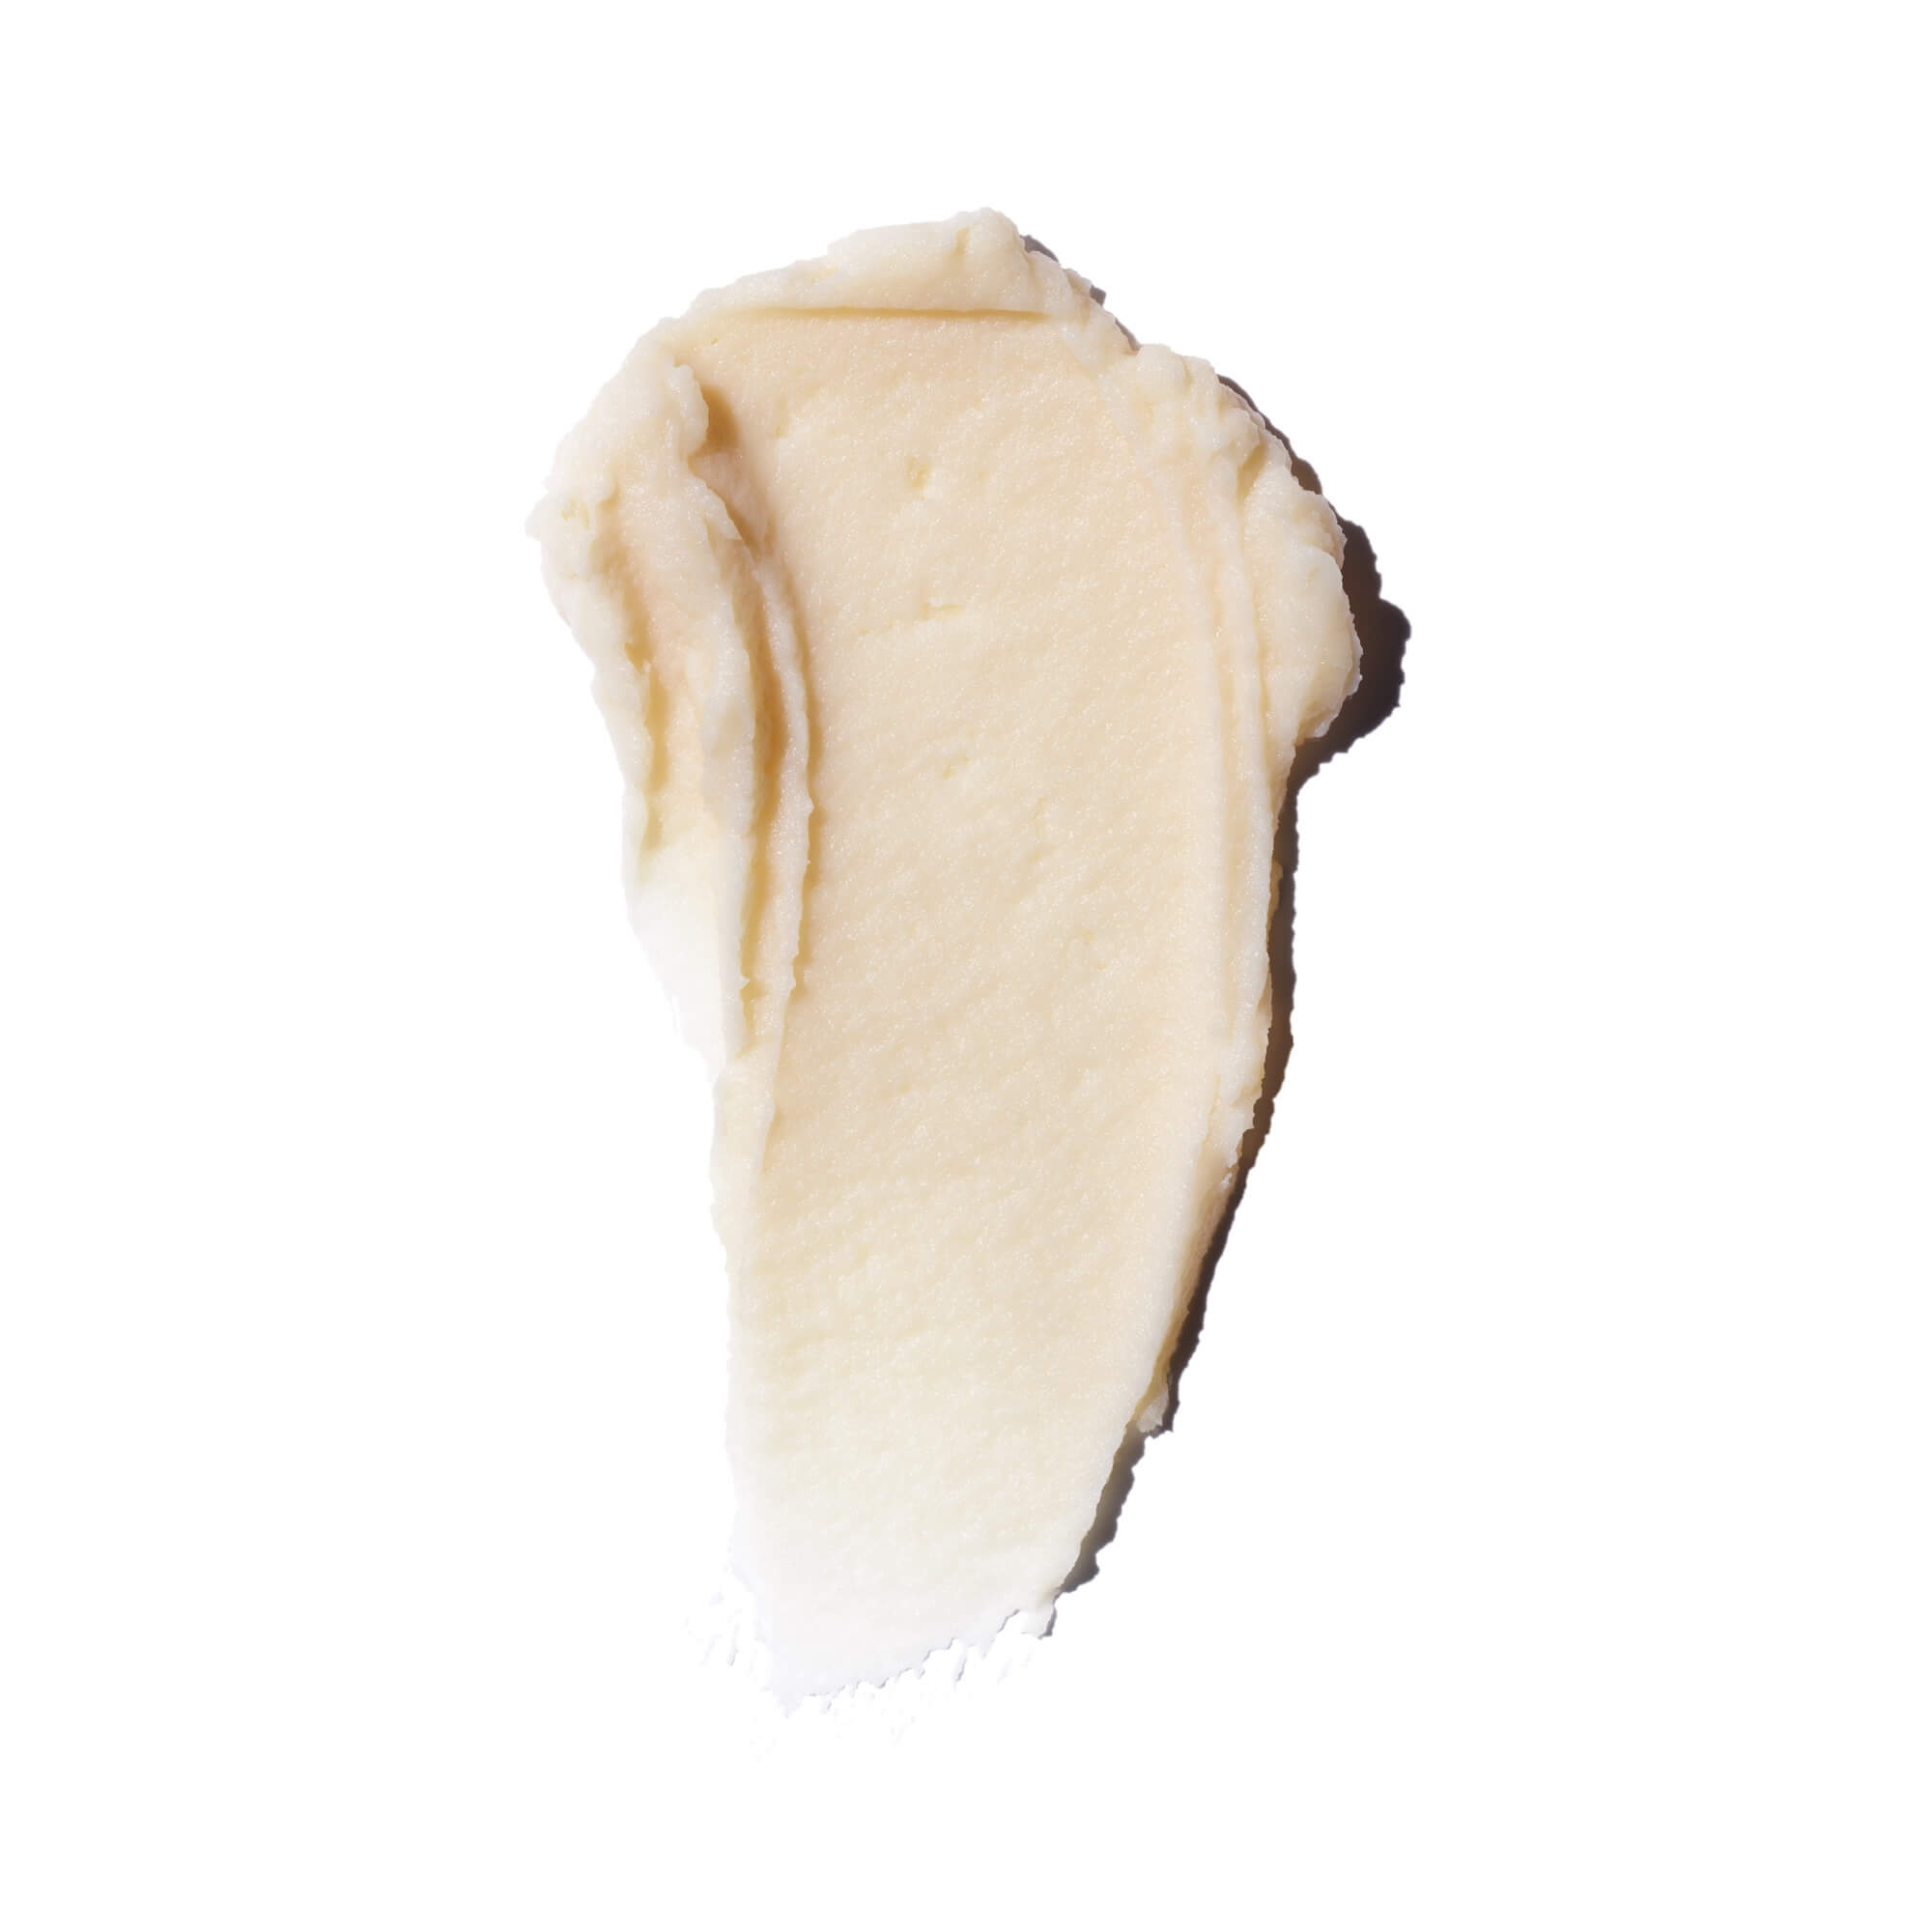 Daily Defense Colloidal Oatmeal Cream rollover image